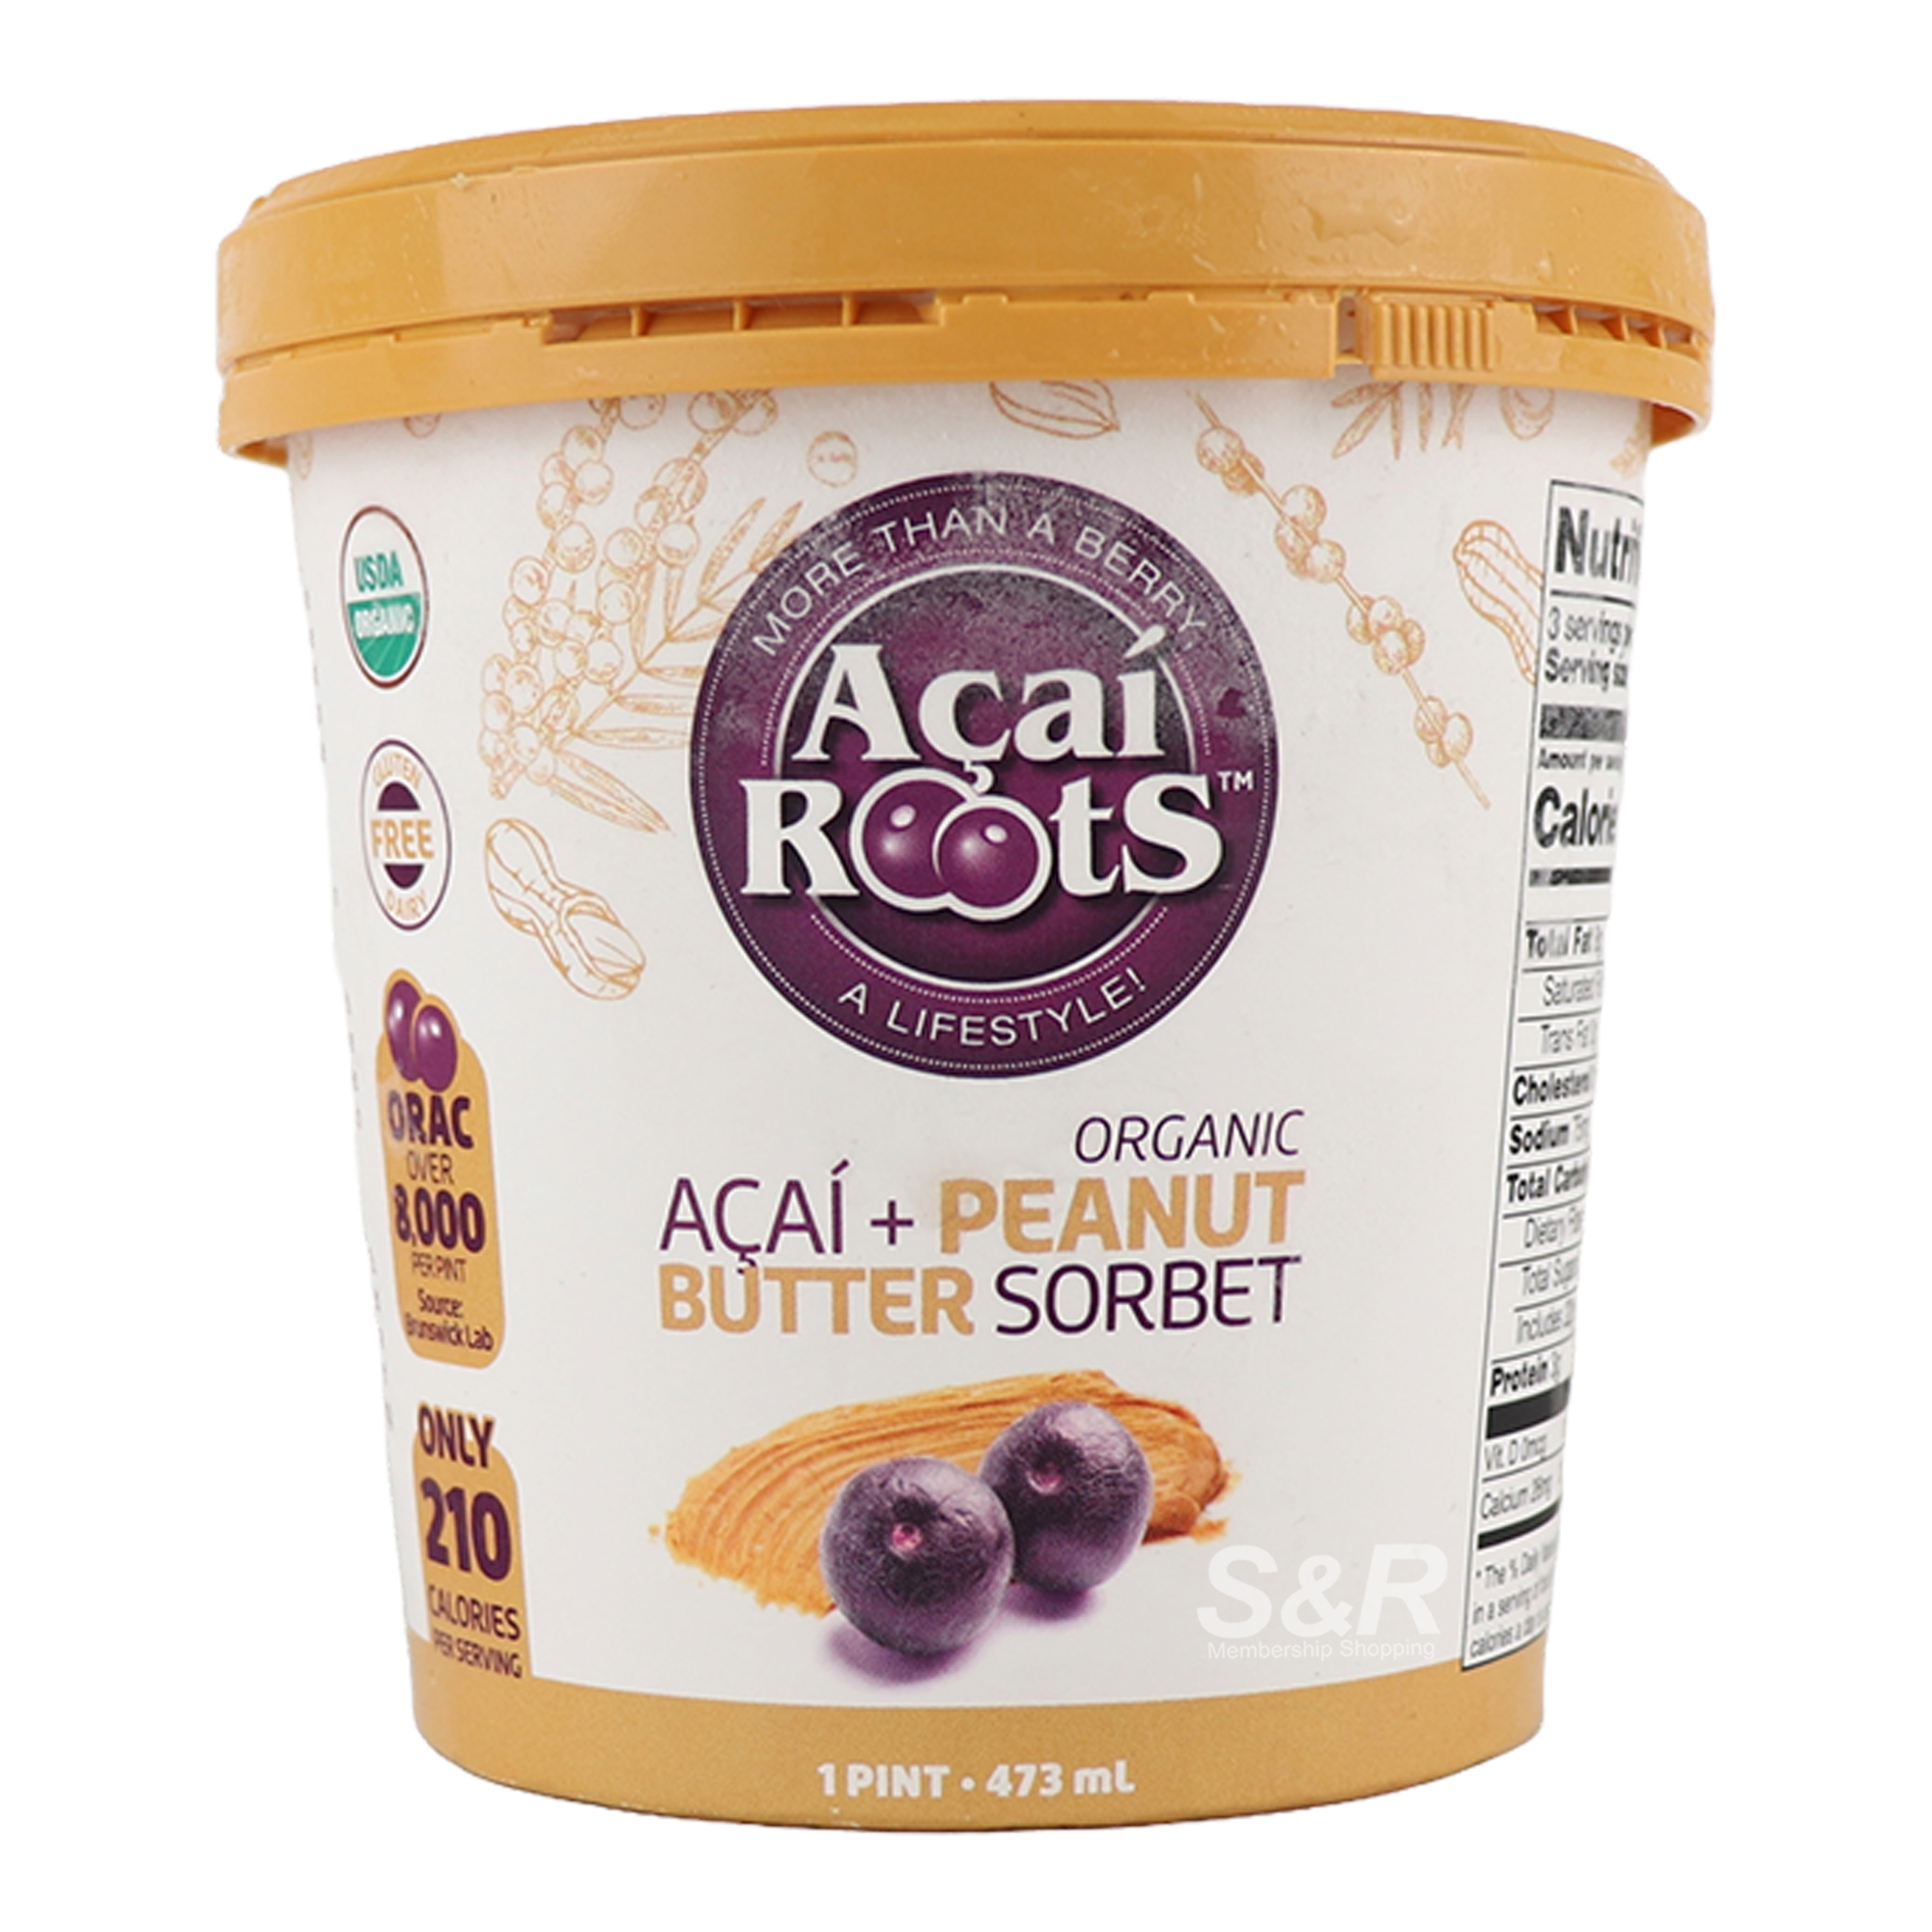 Acai Roots Organic Acai + Peanut Butter Sorbet 473mL